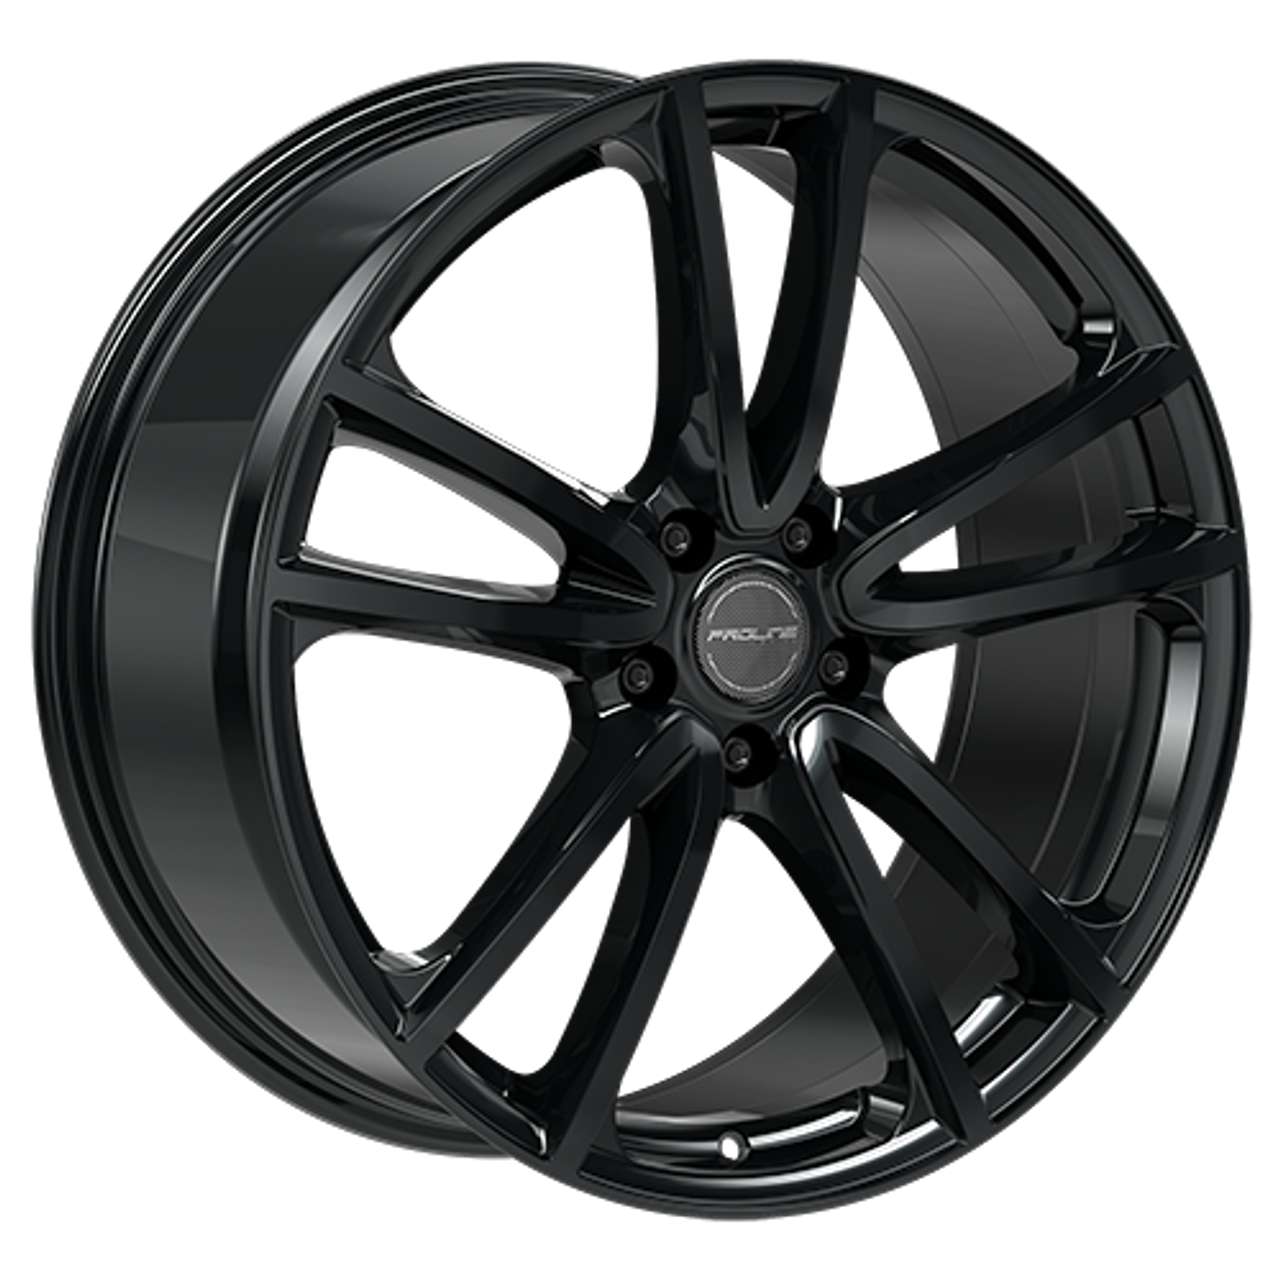 PROLINE CX300 black glossy 8.5Jx20 5x114.3 ET38